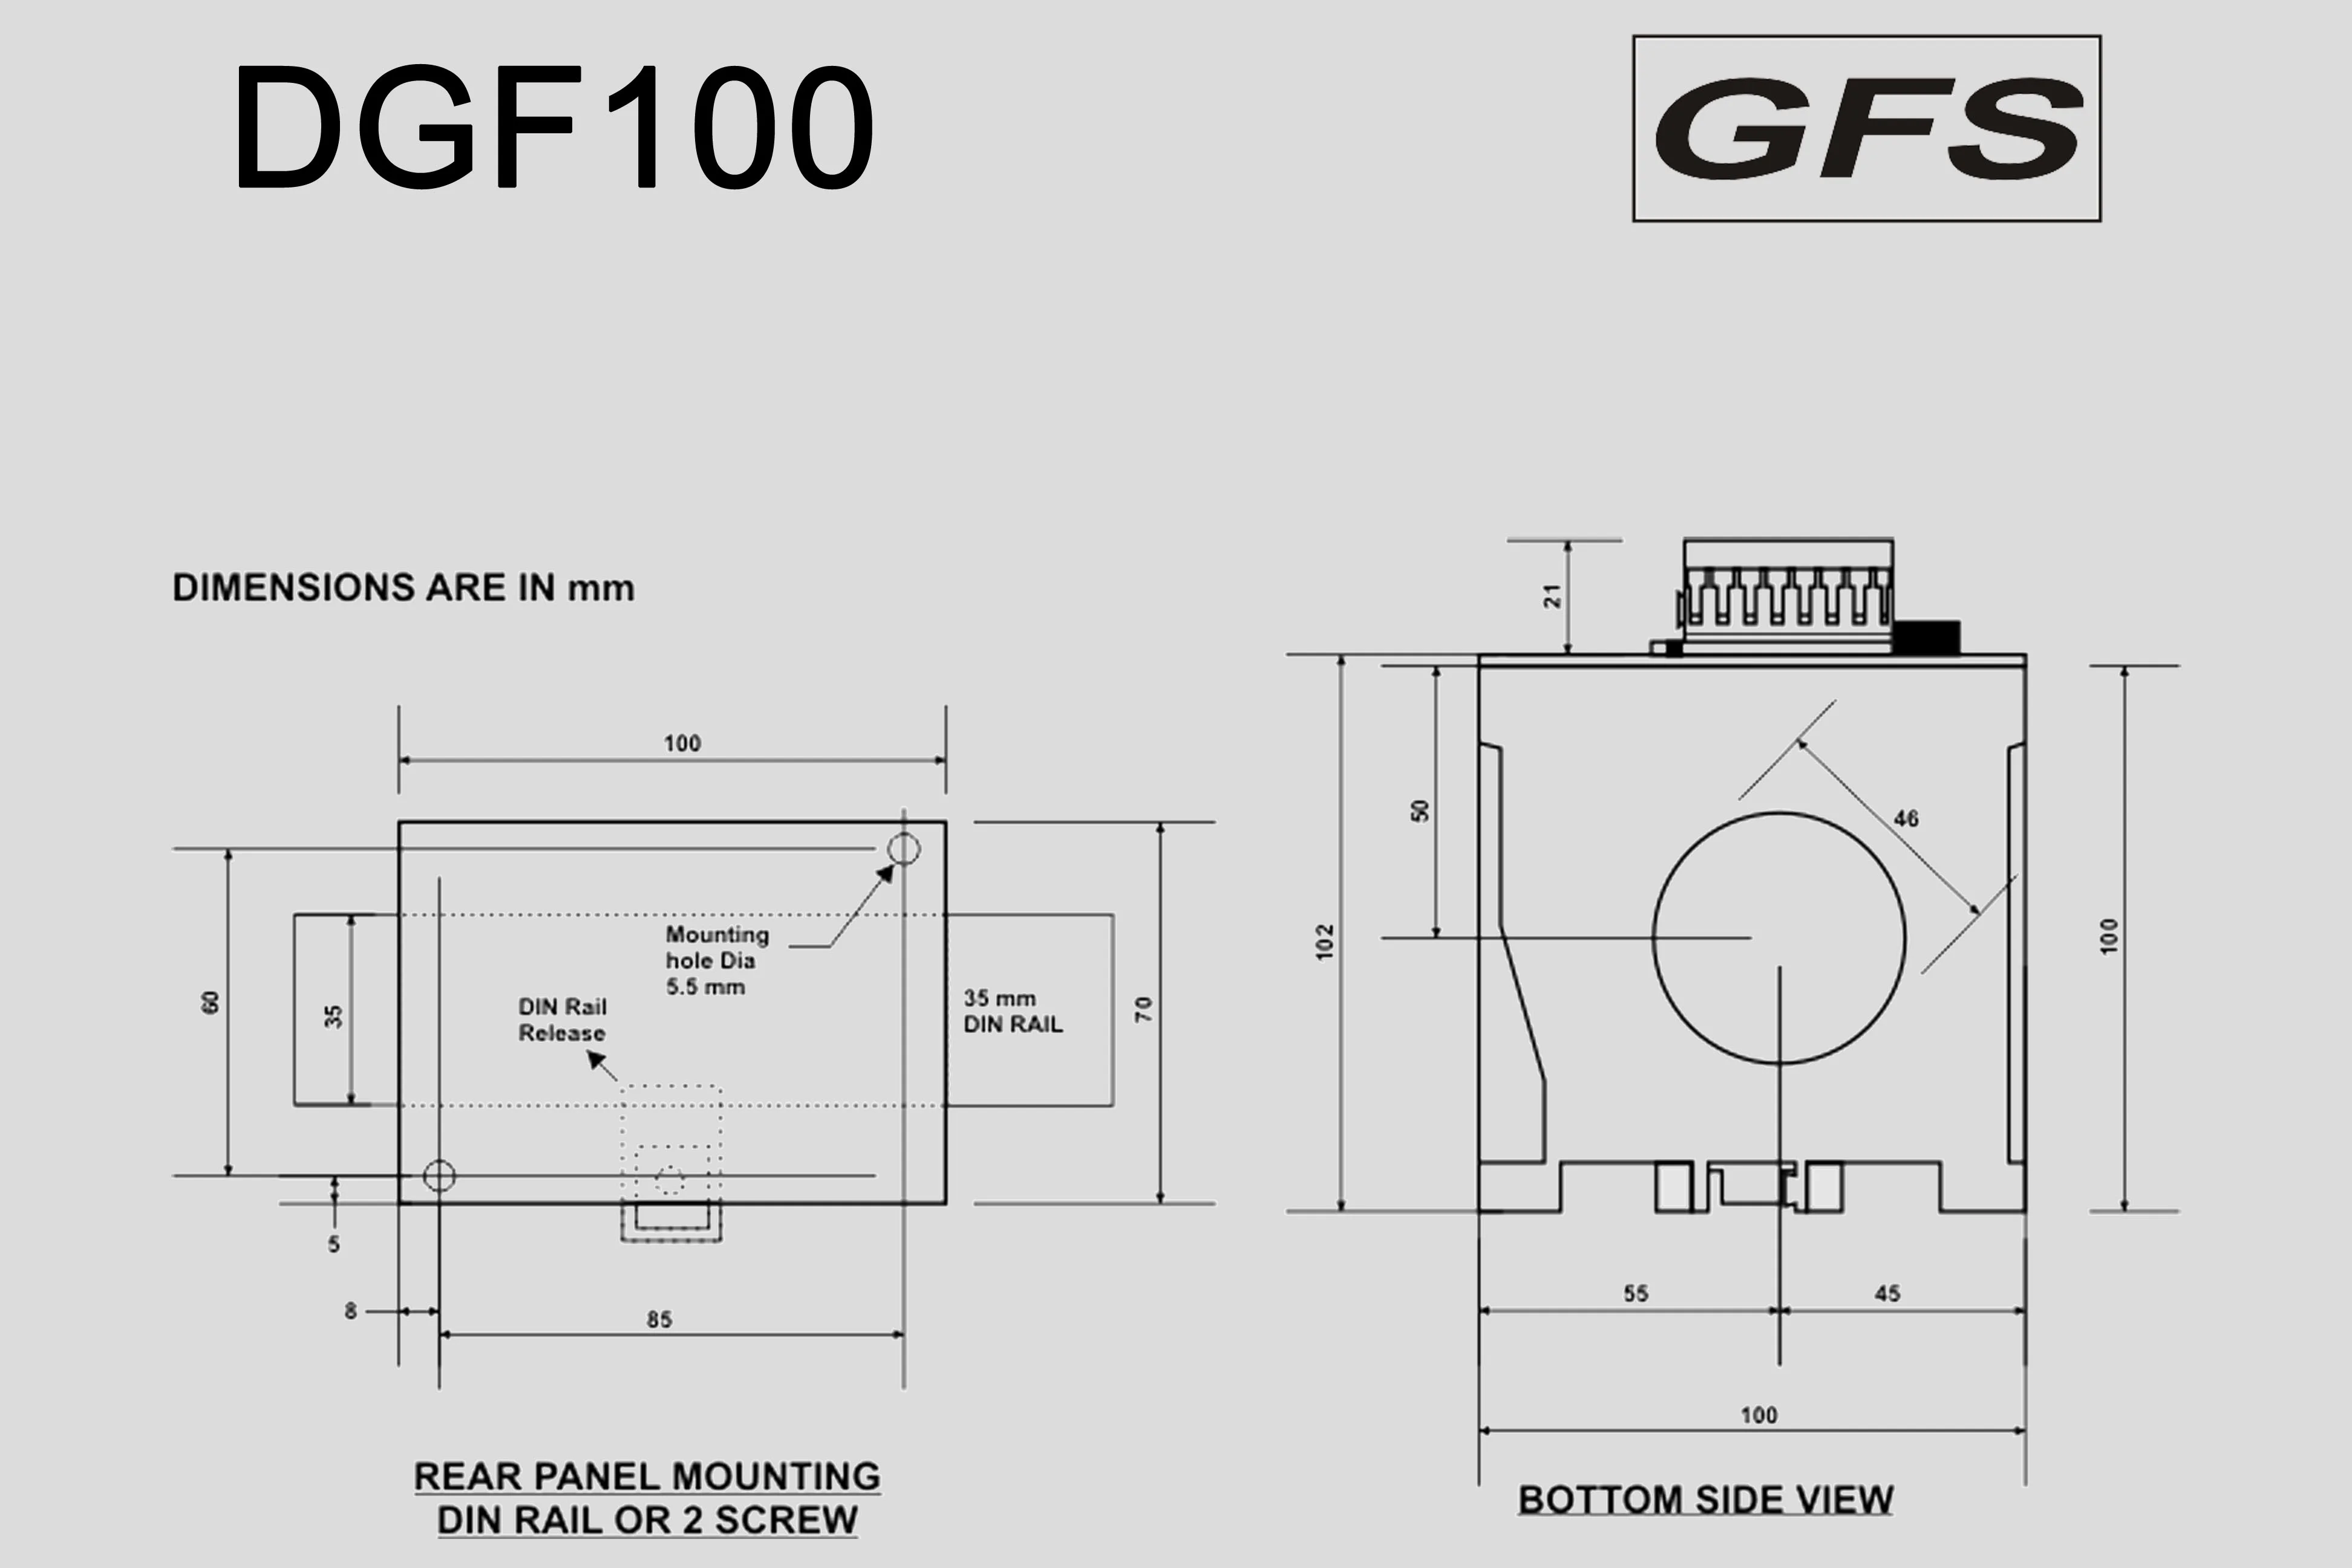 Ground Fault Relay DGF100 dimensions